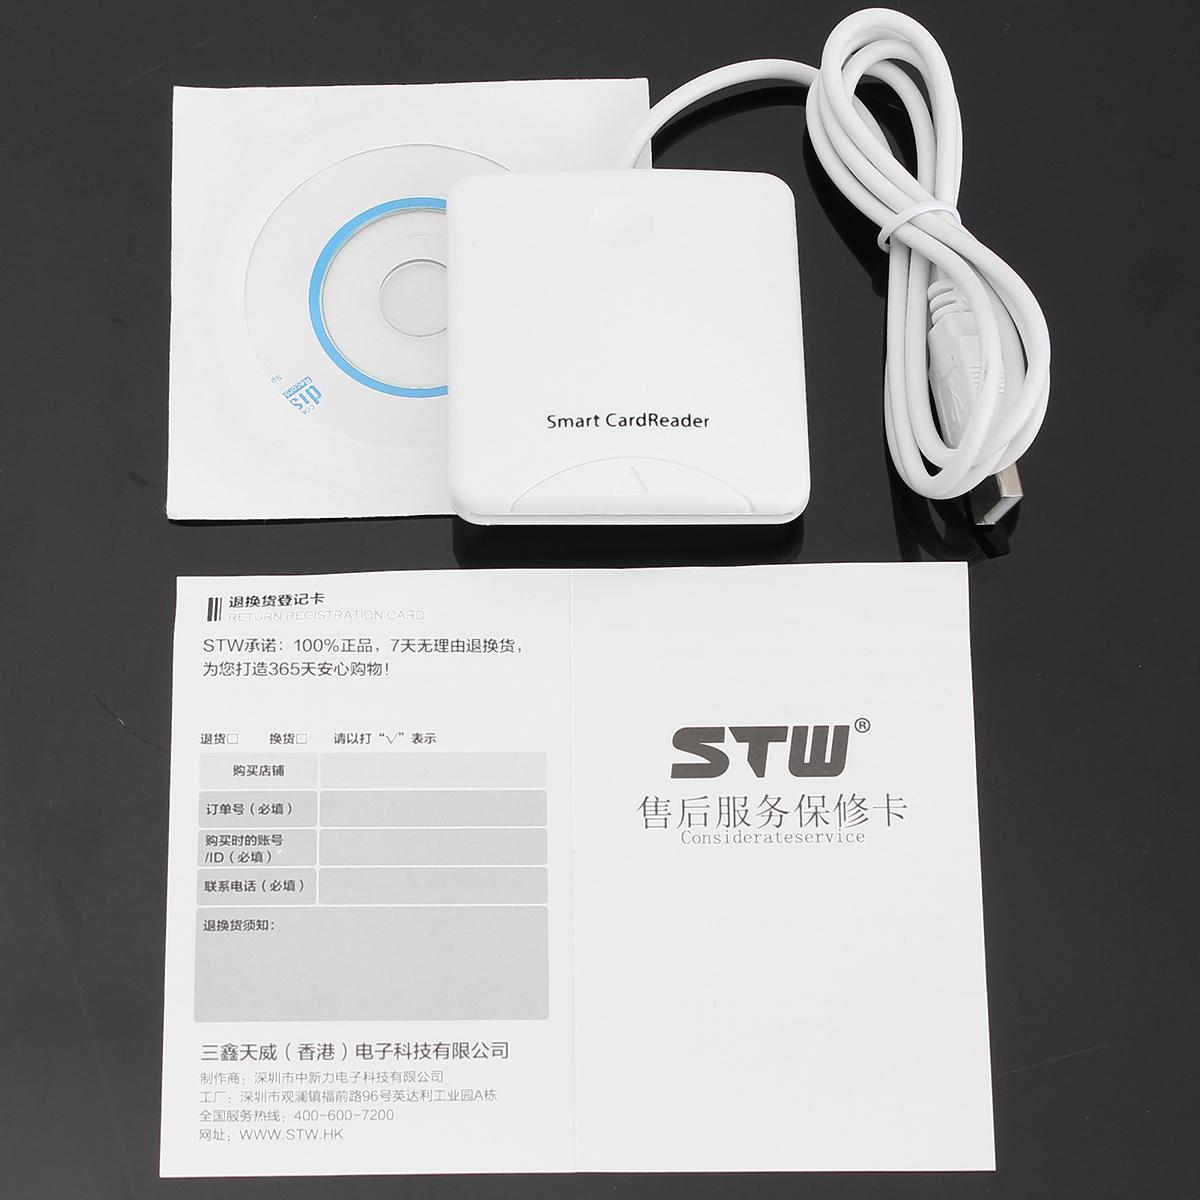 install smart card reader model stw-037